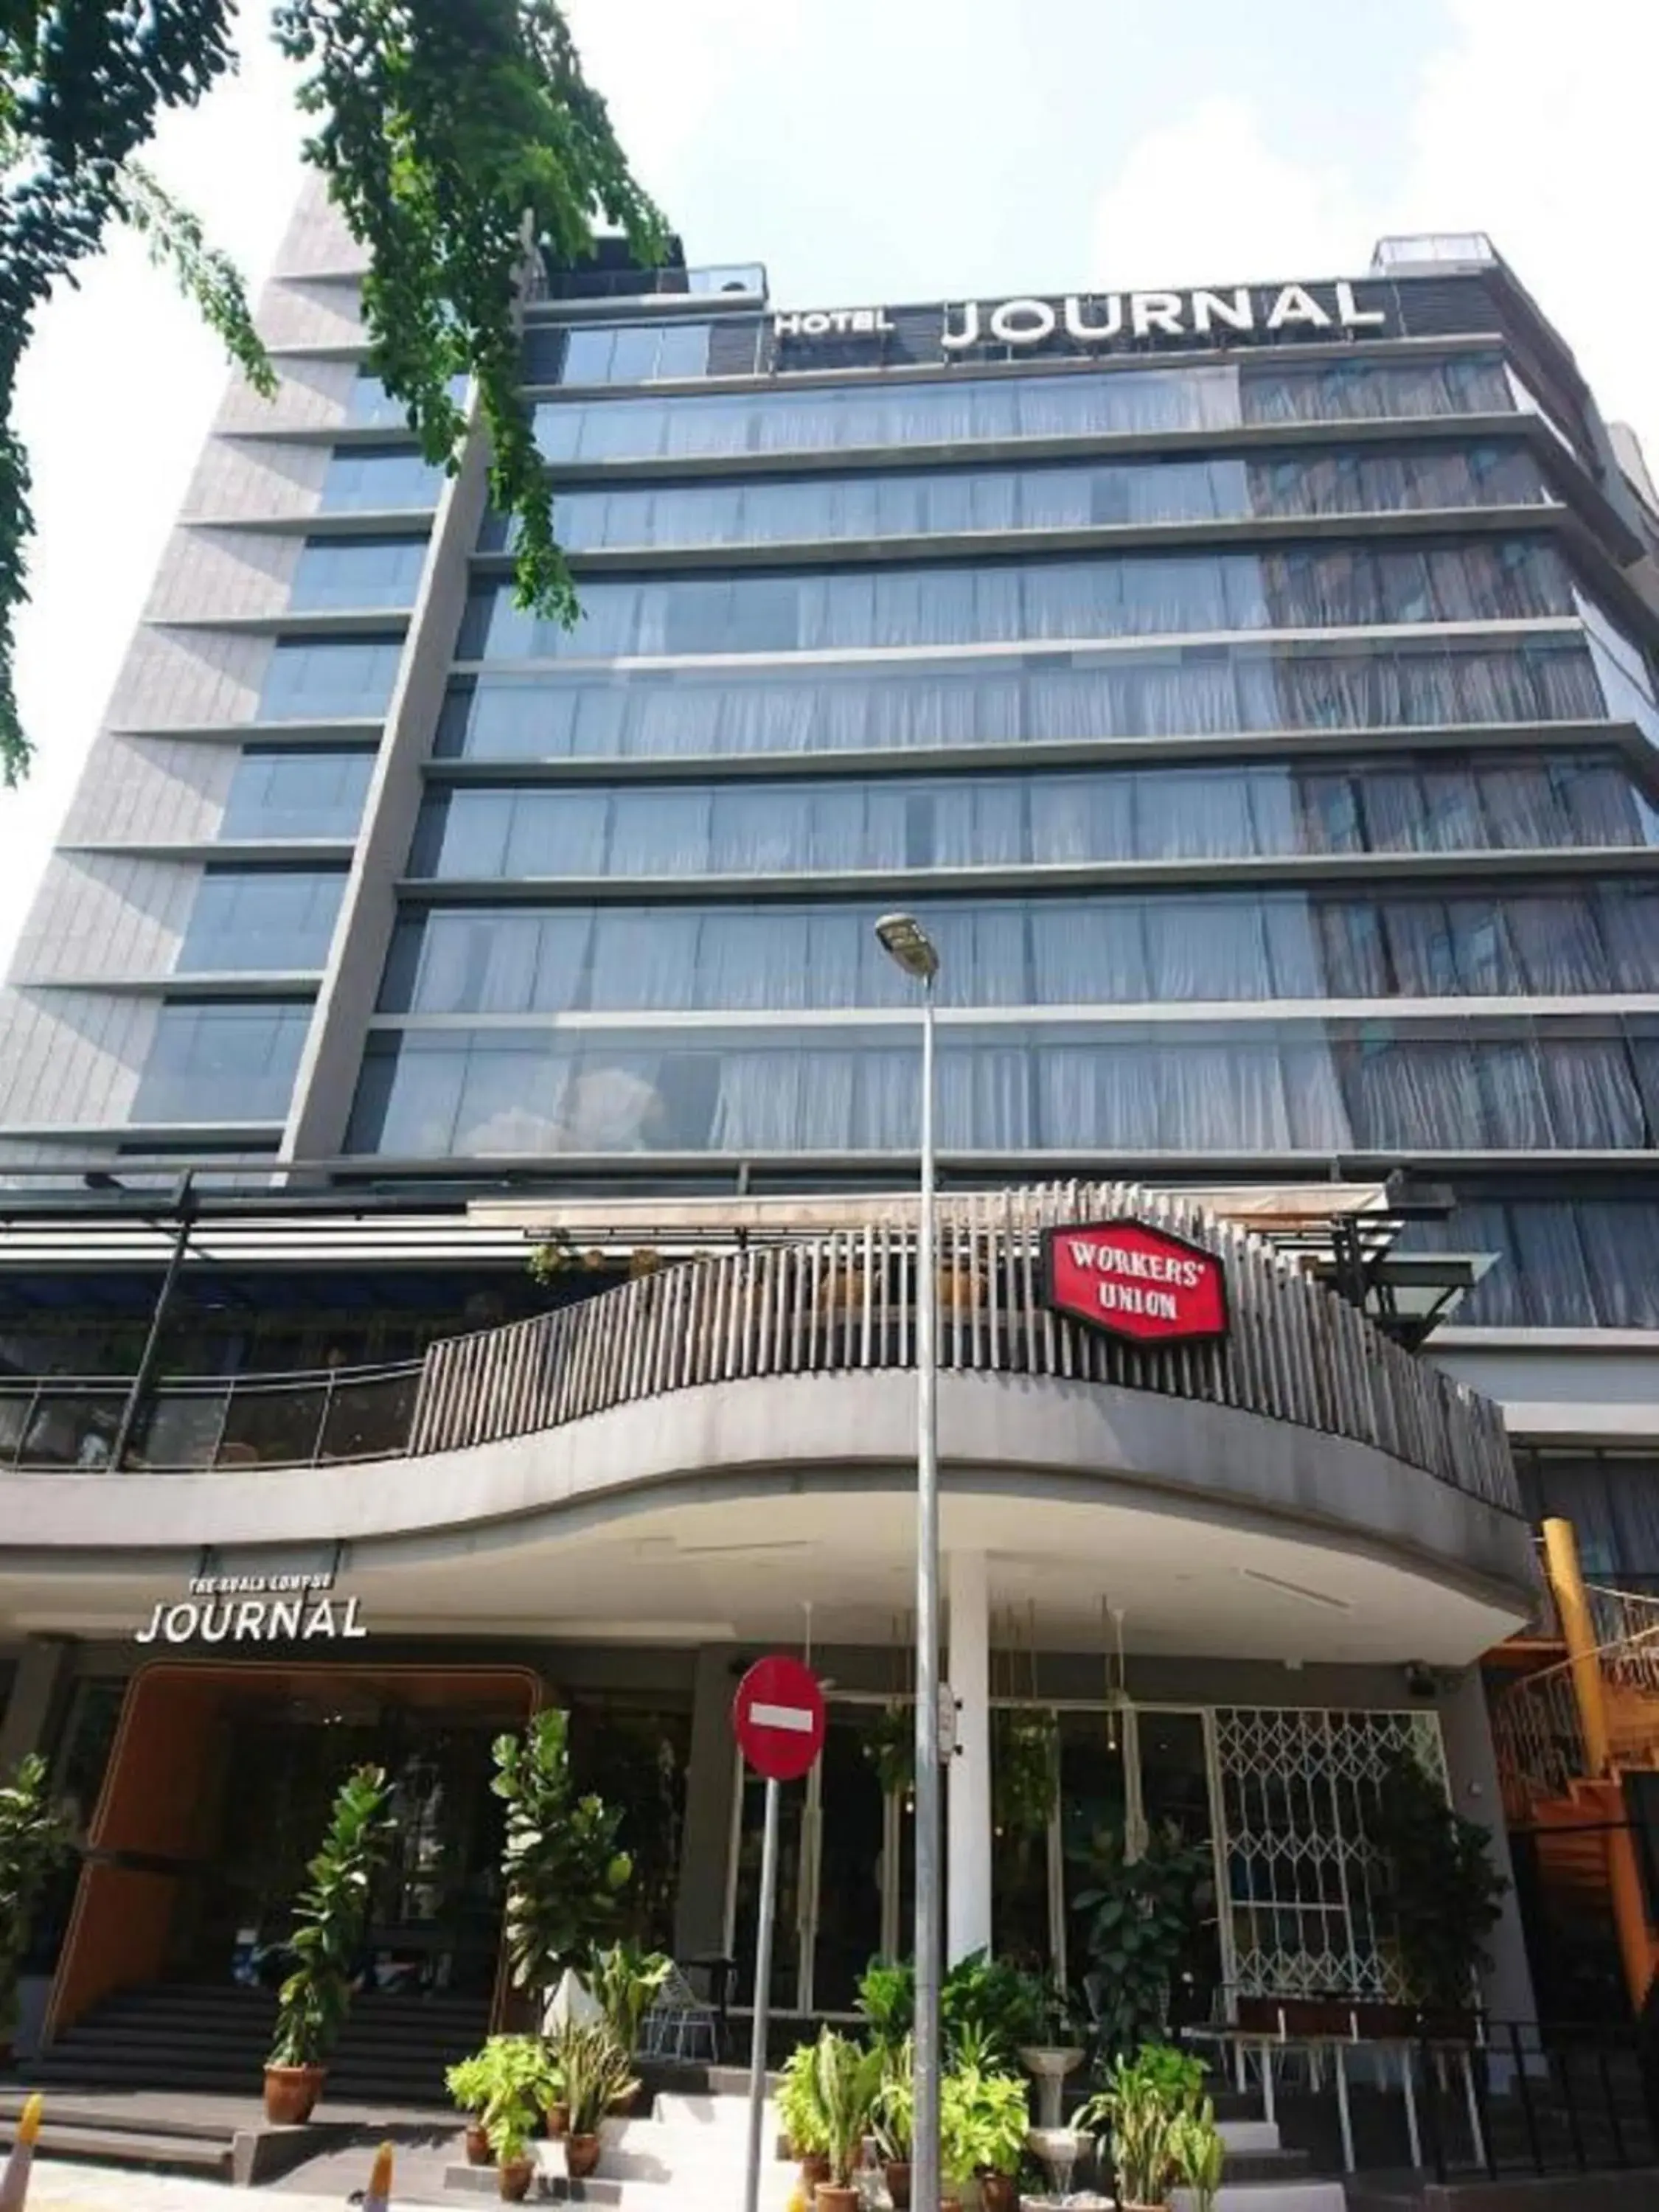 Facade/entrance in The Kuala Lumpur Journal Hotel